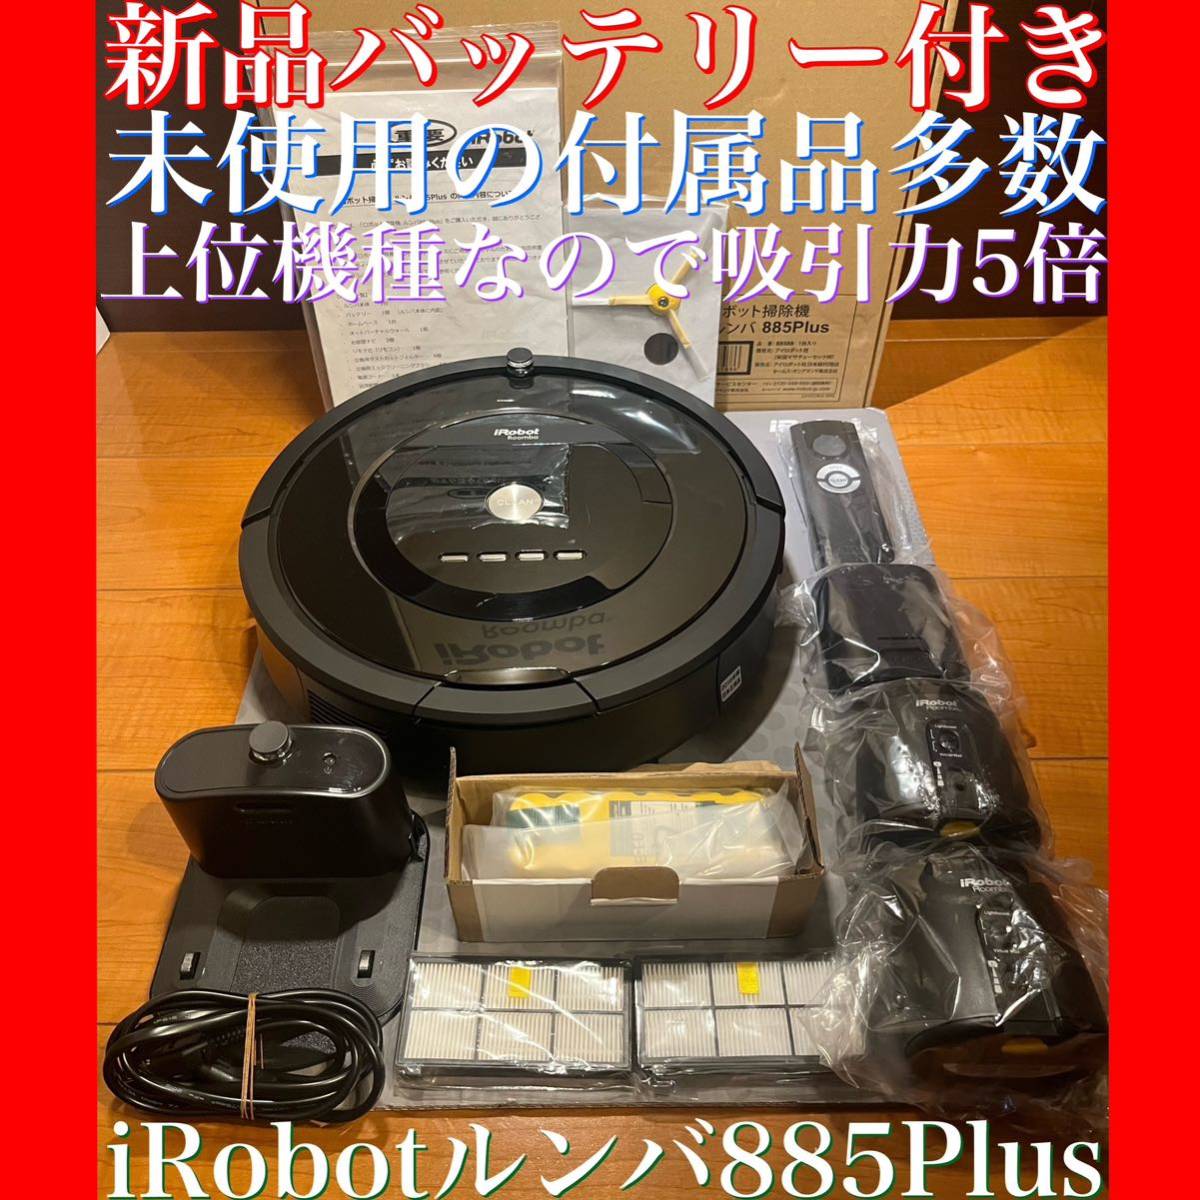 【82%OFF!】 新品バッテリー付き iRobotルンバ780 ロボット掃除機 スマート家電 リベ asakusa.sub.jp